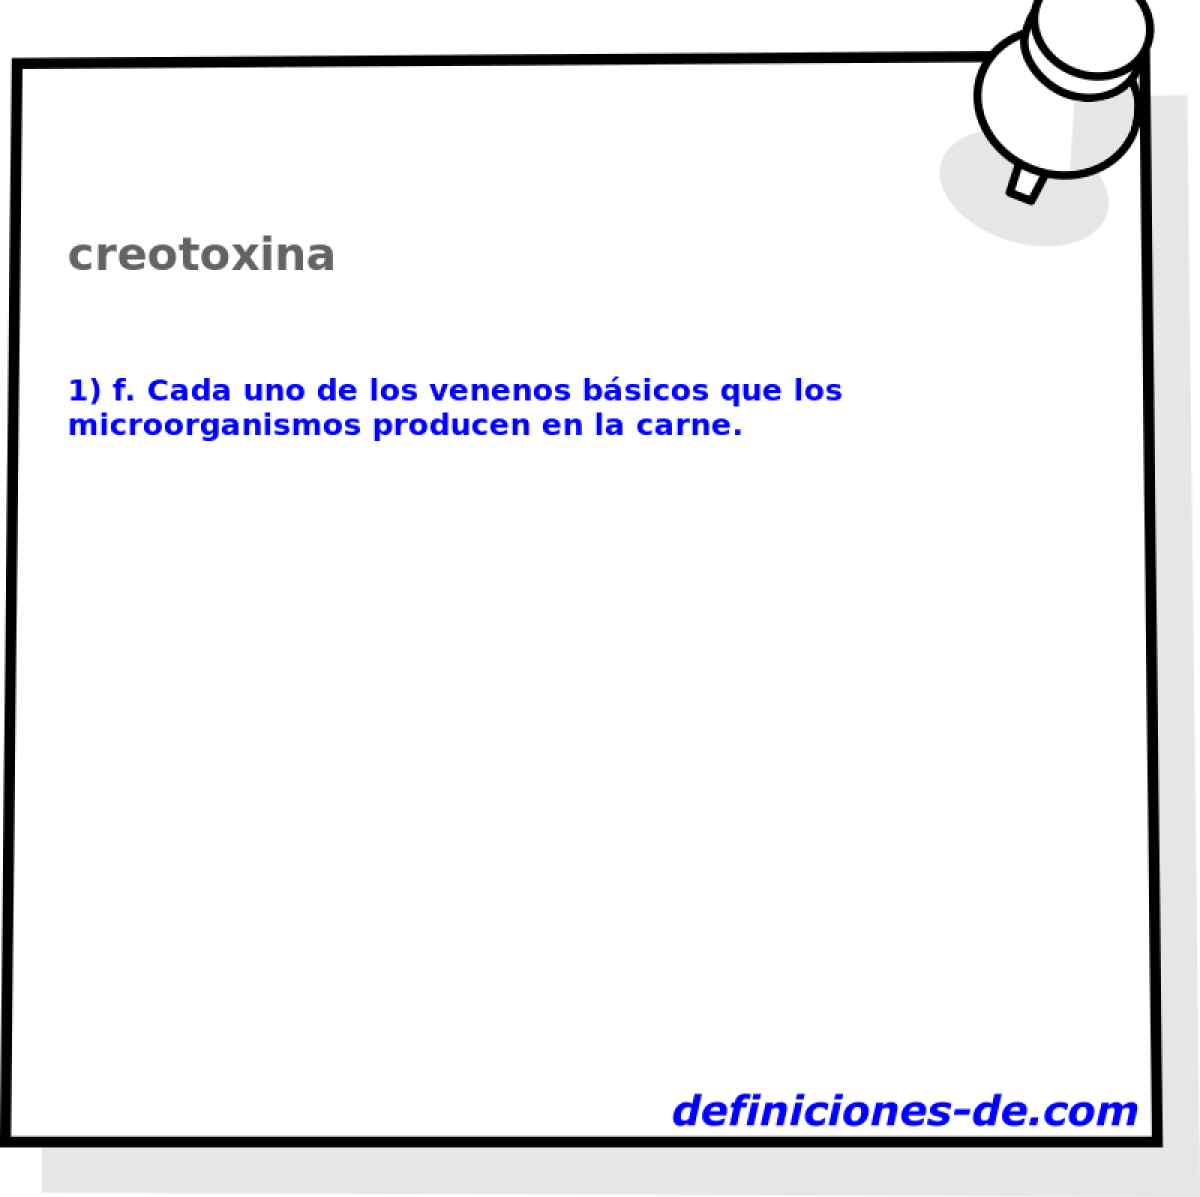 creotoxina 